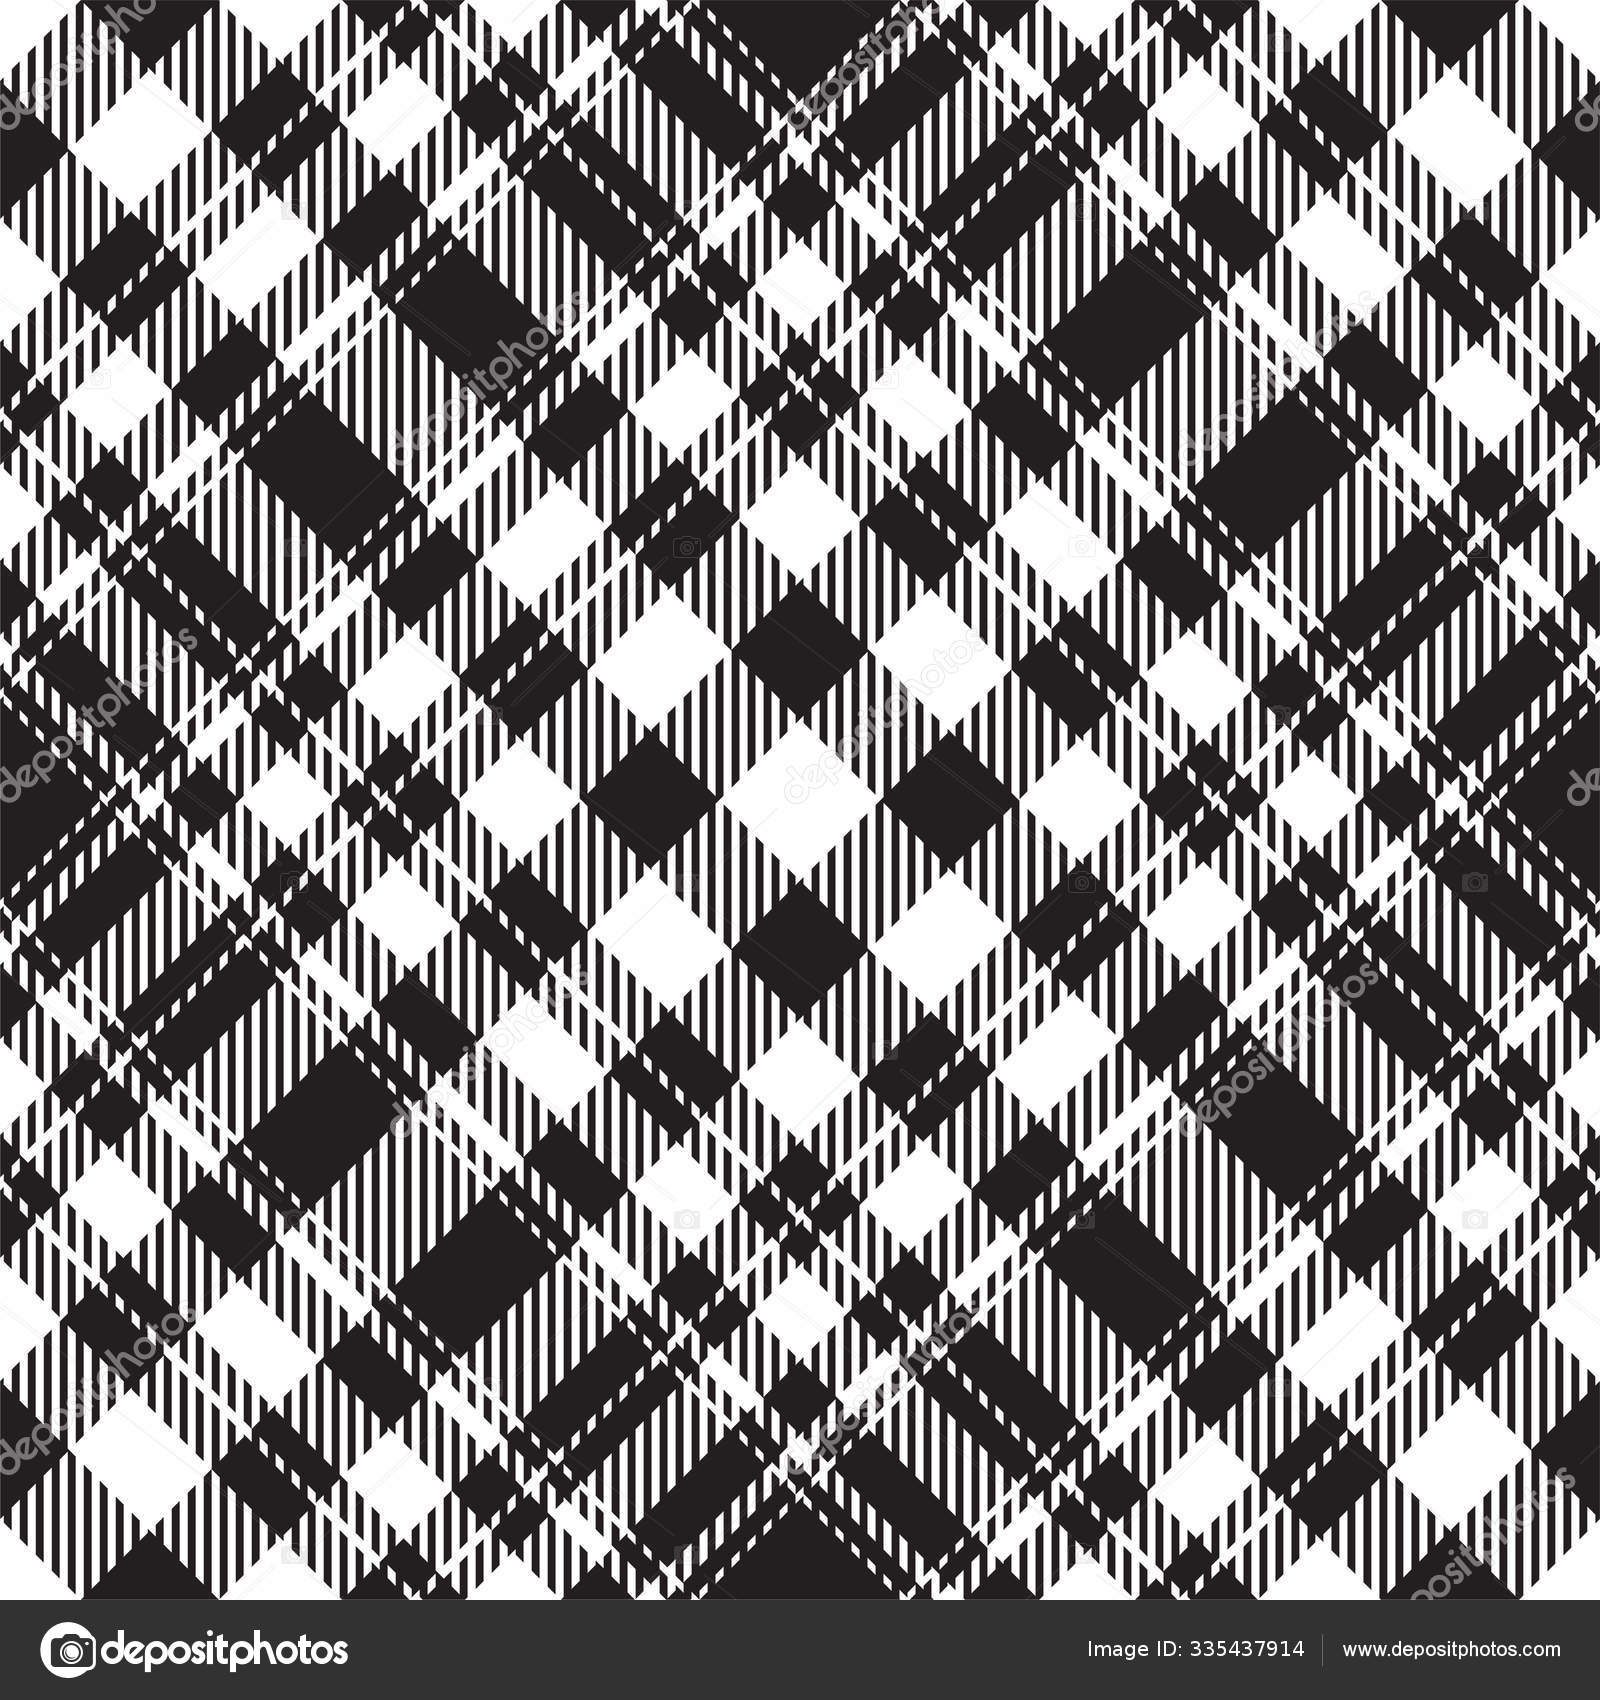 https://st3.depositphotos.com/2934765/33543/v/1600/depositphotos_335437914-stock-illustration-tartan-scotland-seamless-plaid-pattern.jpg